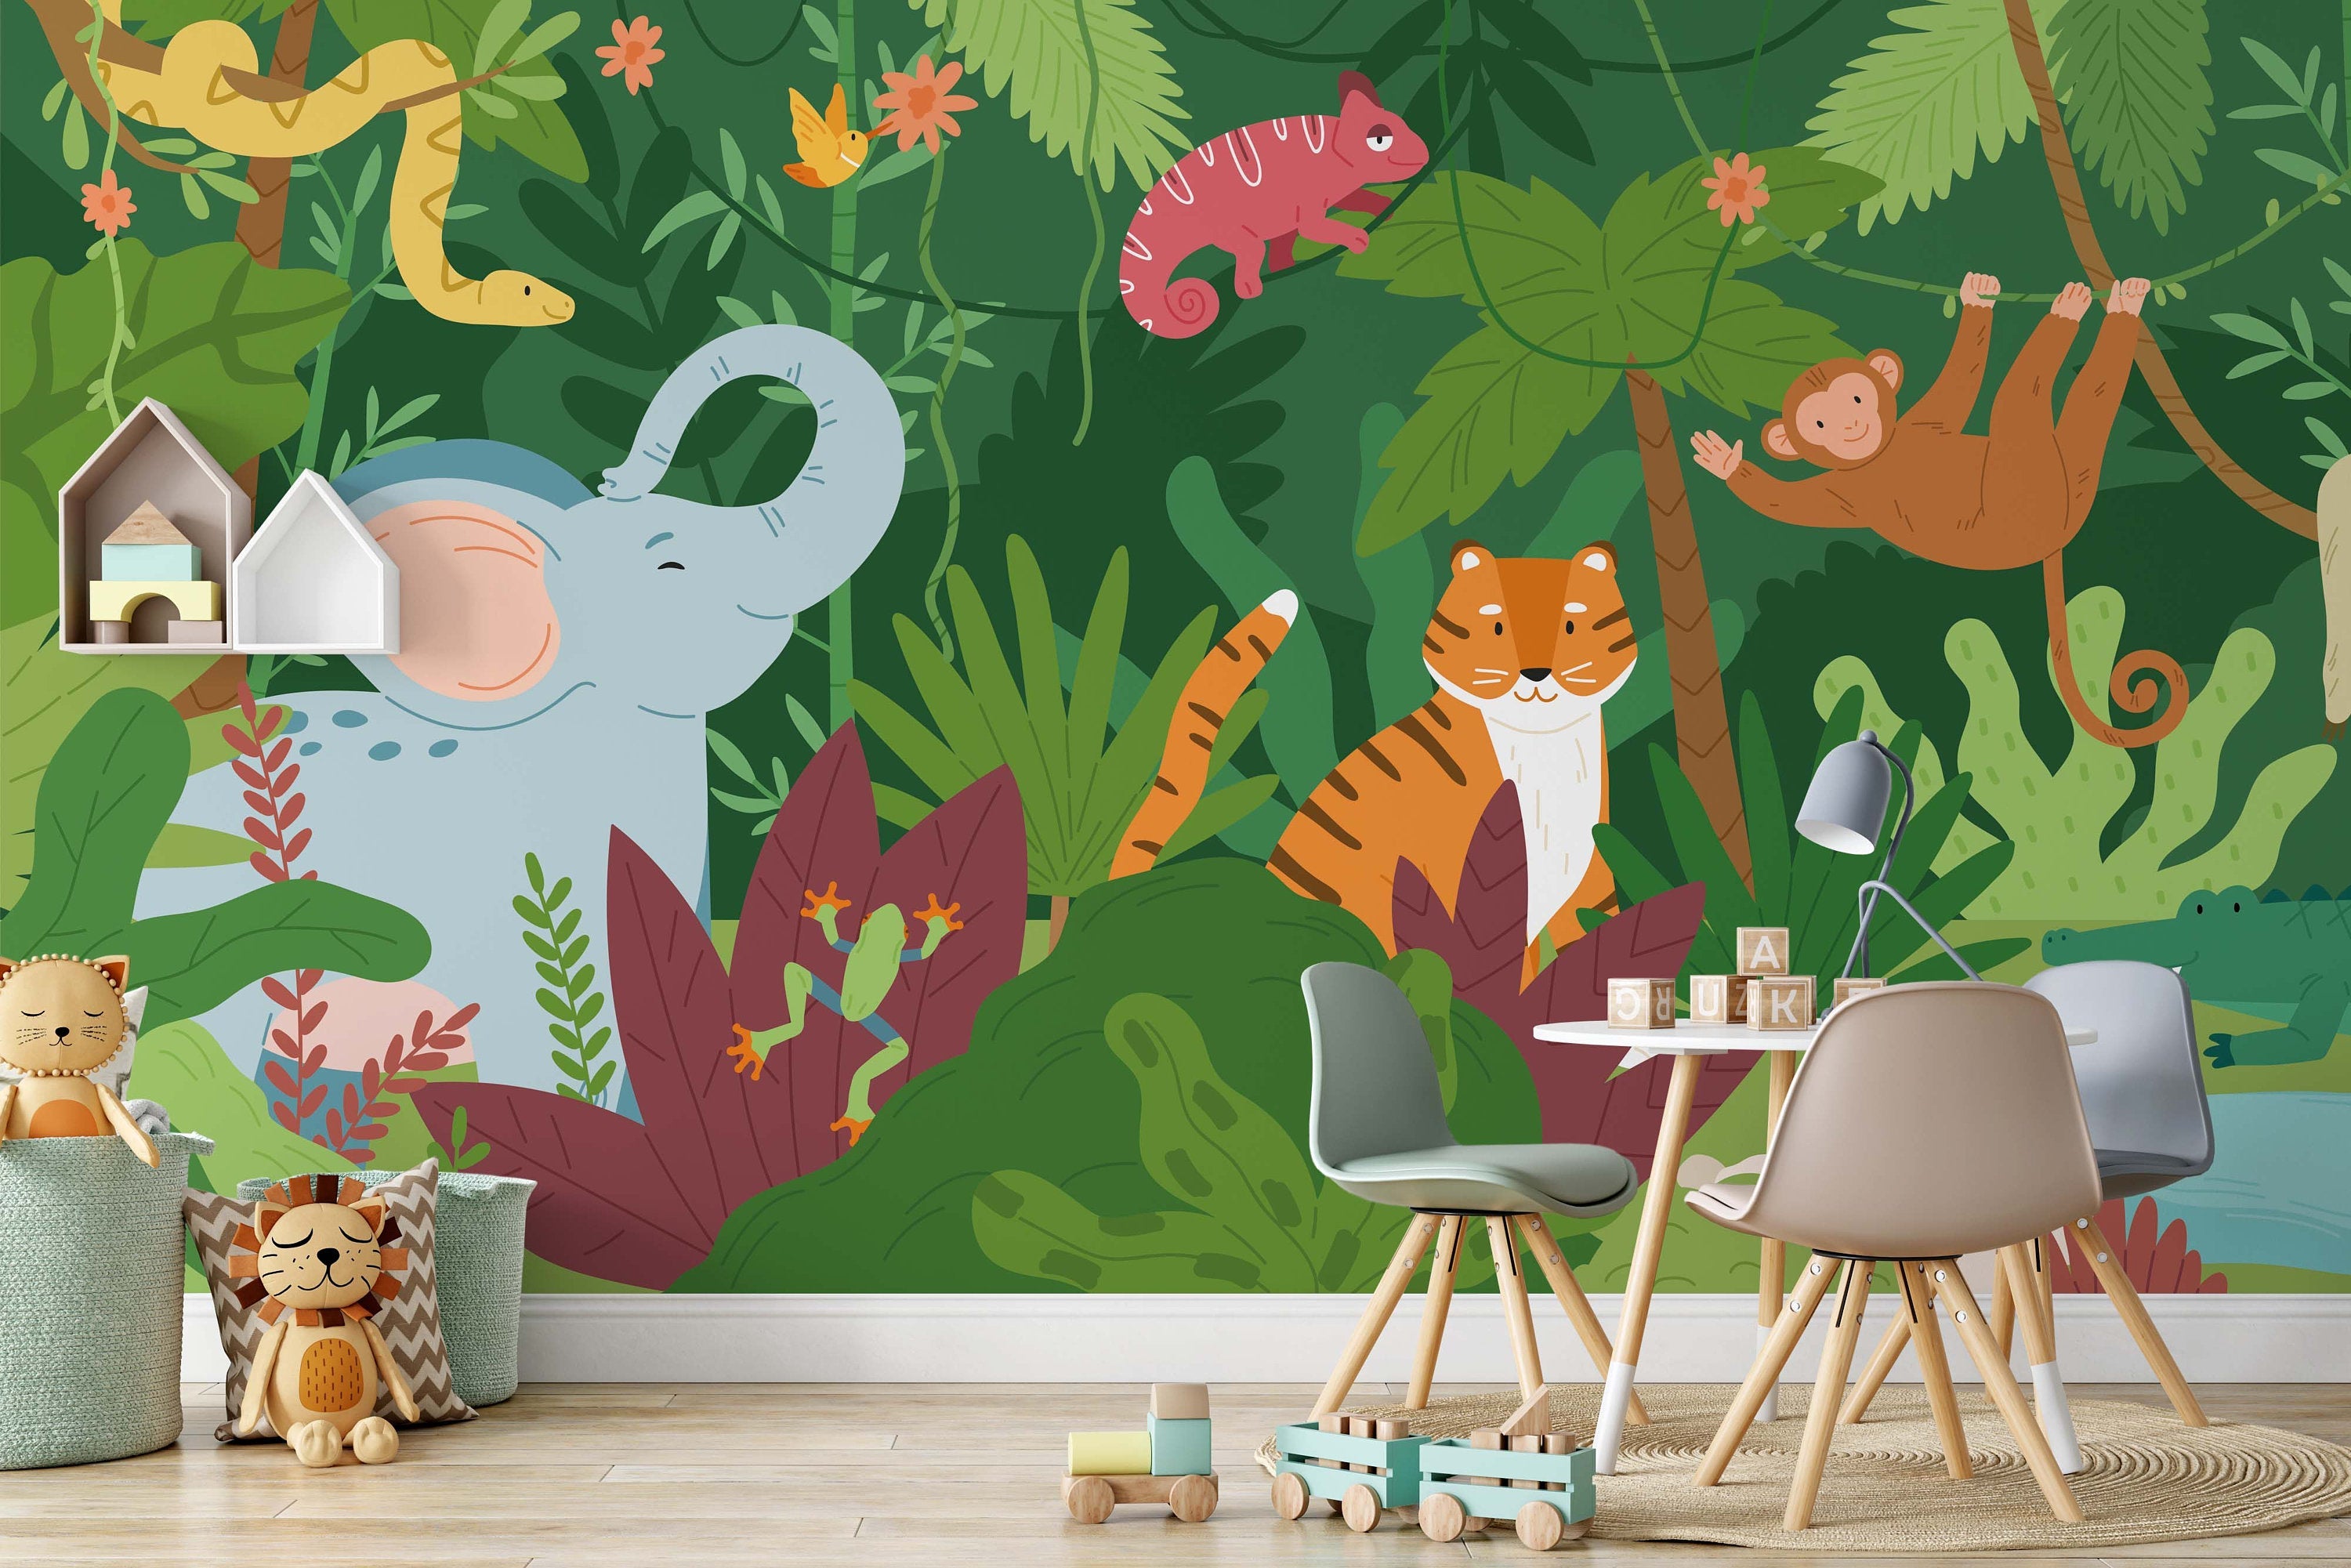 Cute Funny Inhabitants of African Jungle Exotic Plants Palm Trees Animals Wallpaper Bedroom Children Kids Room Mural Decor Wall Art